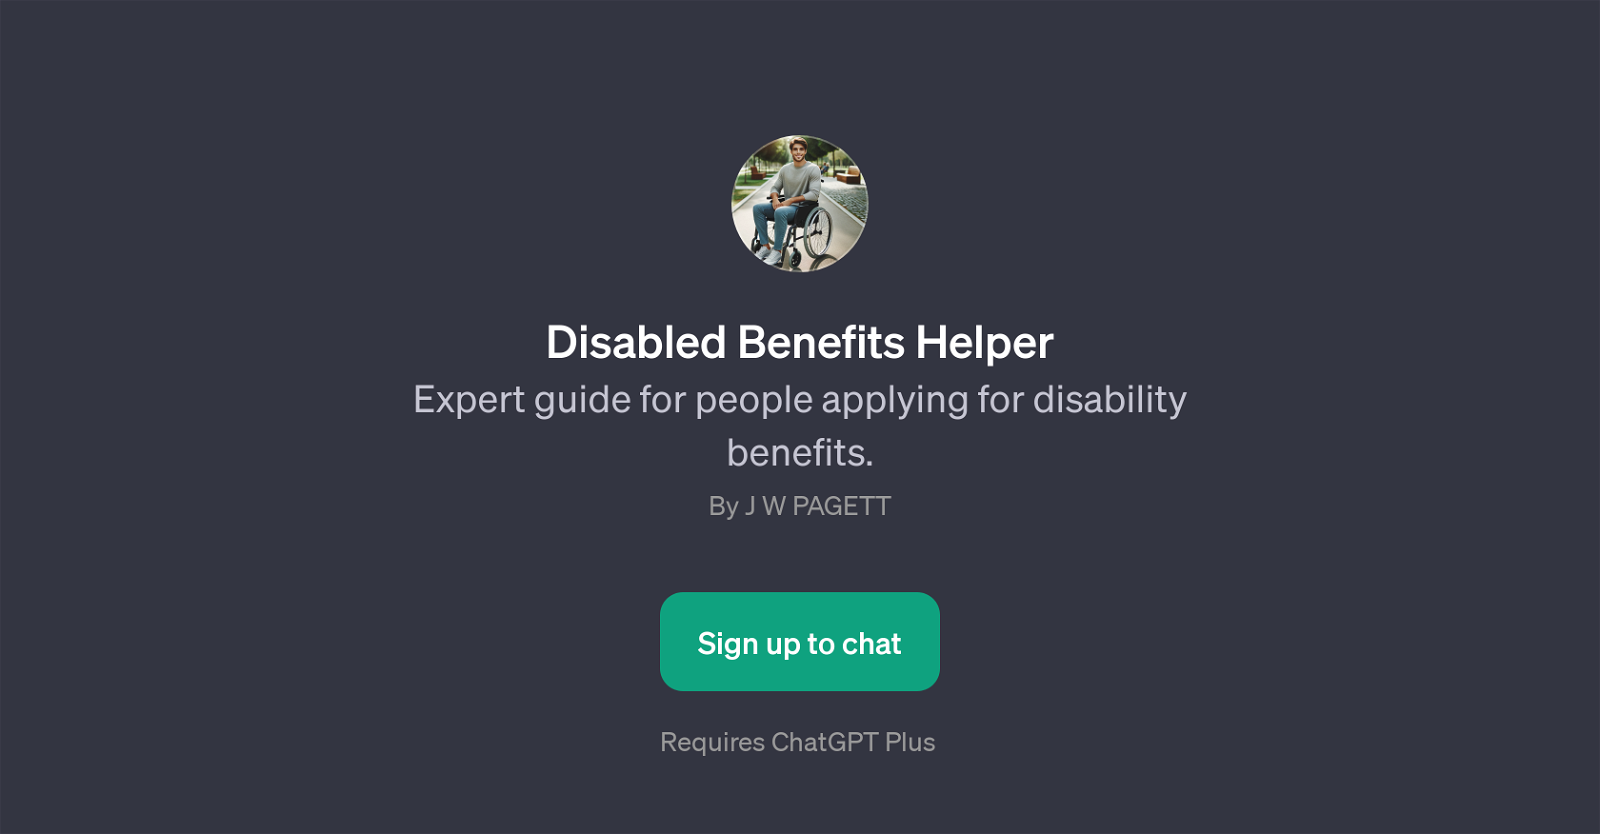 Disabled Benefits Helper website